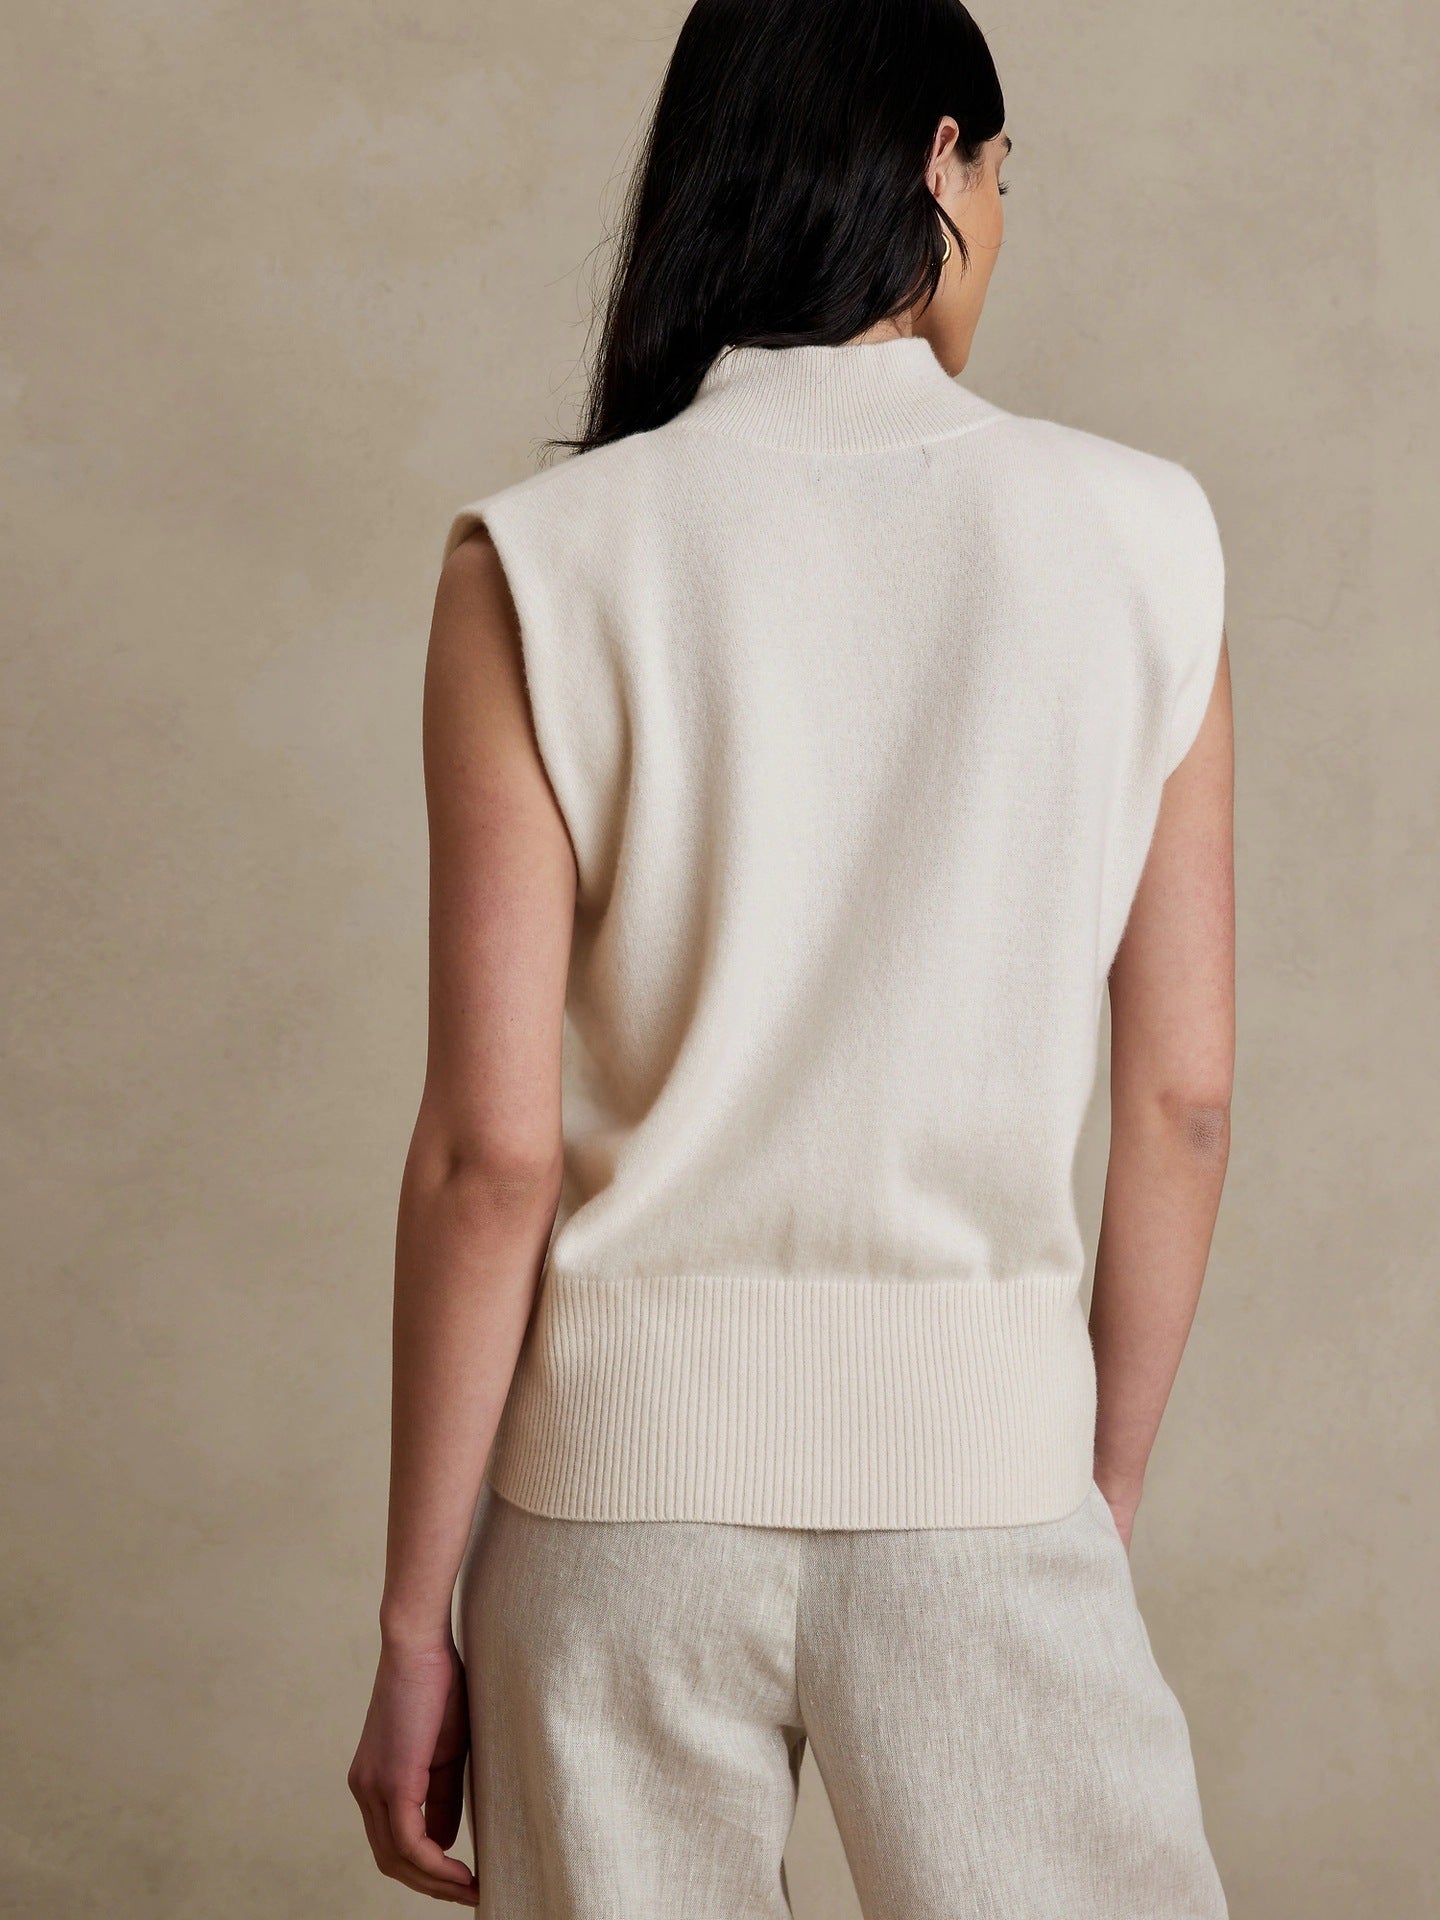 Women's Pure Color Half Collar Sleeveless Fashion Simple Sweaters